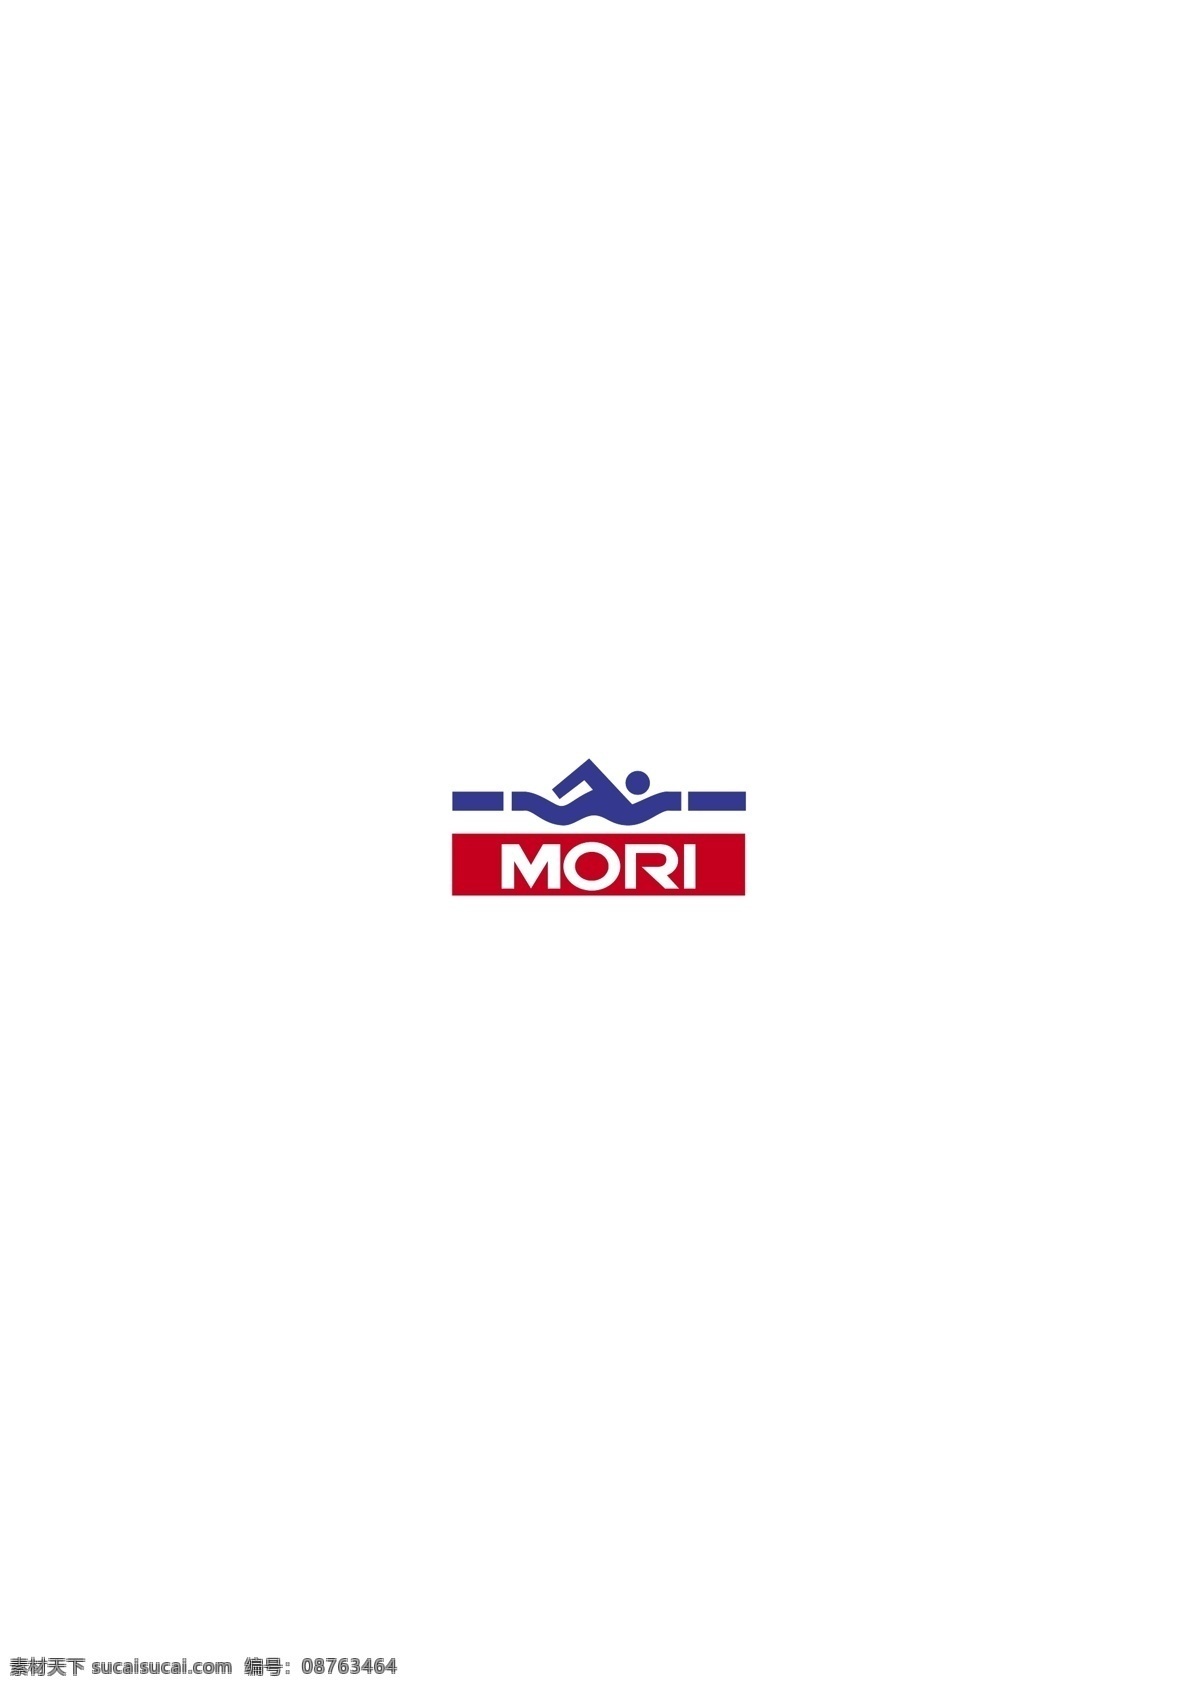 mori logo大全 logo 设计欣赏 商业矢量 矢量下载 运动 赛事 标志 标志设计 欣赏 网页矢量 矢量图 其他矢量图